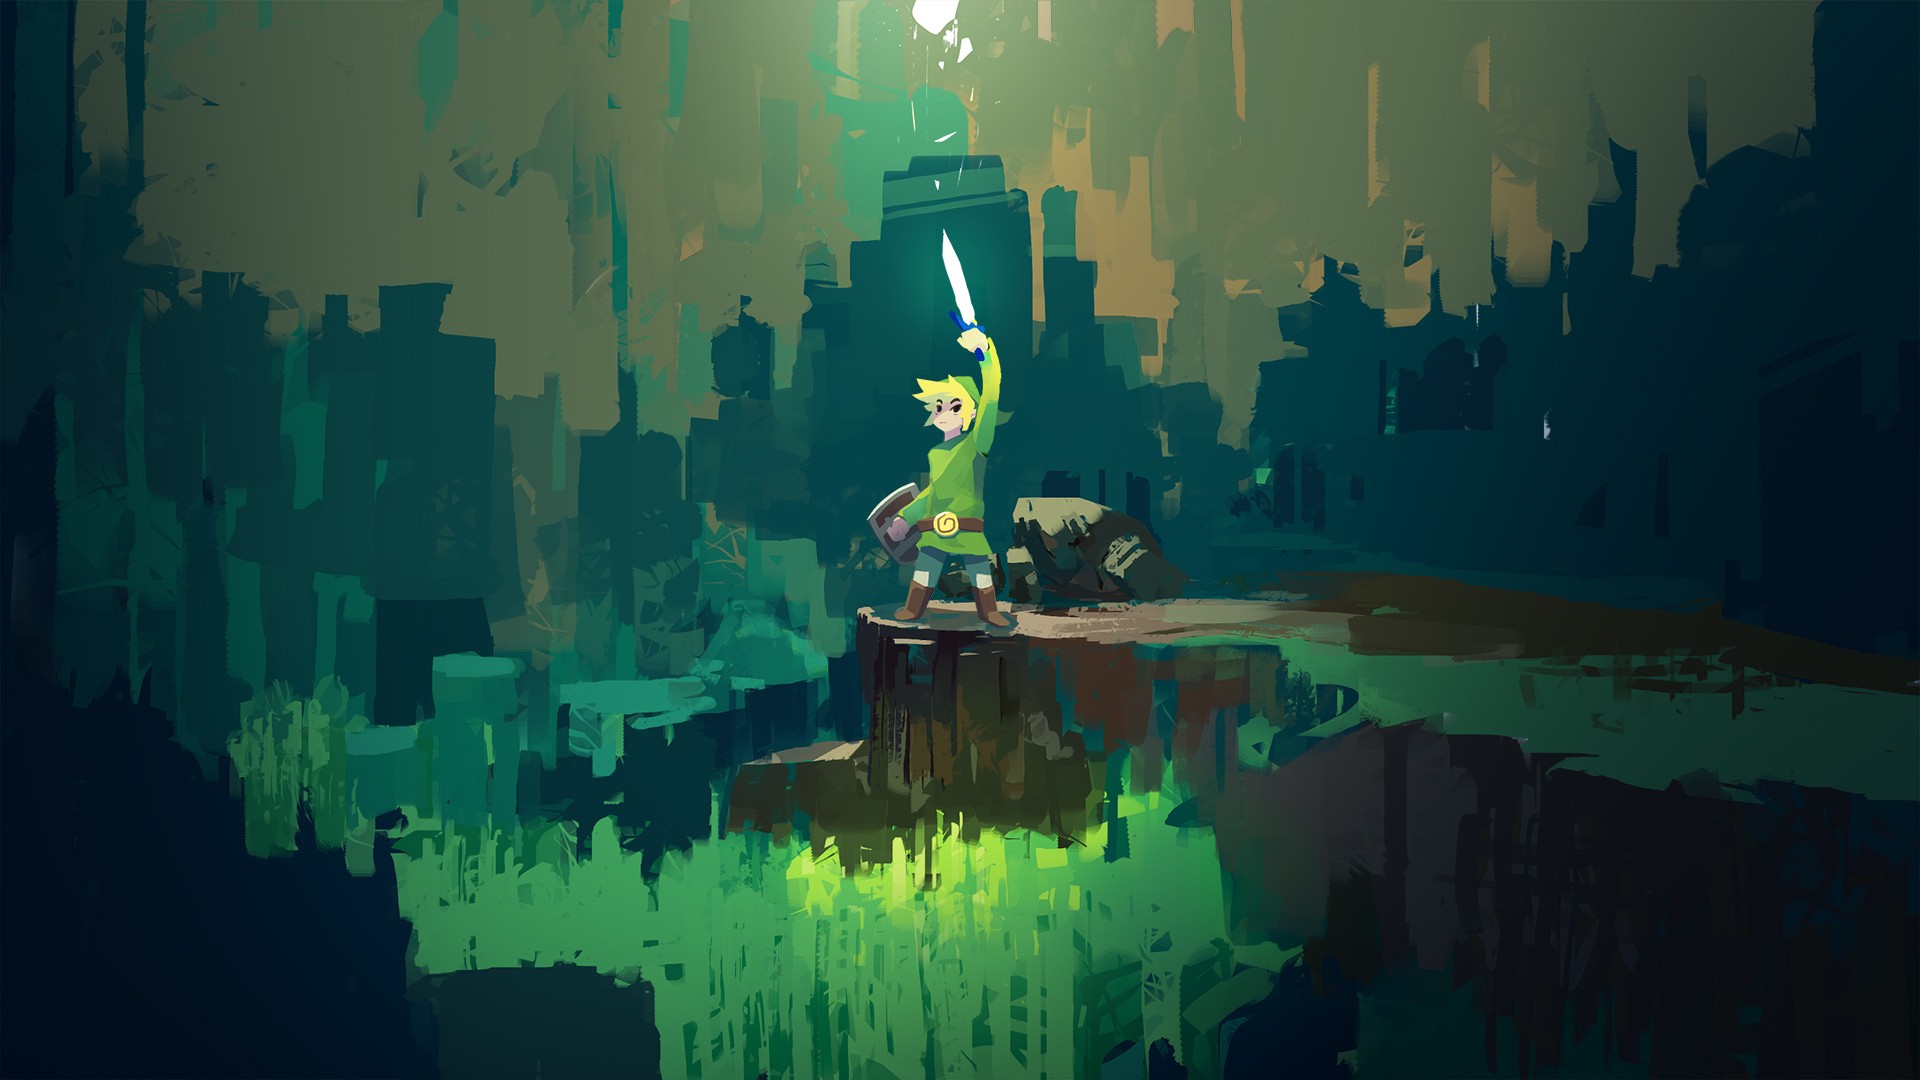 the legend of zelda link wallpapers,green,adventure game,screenshot,illustration,world